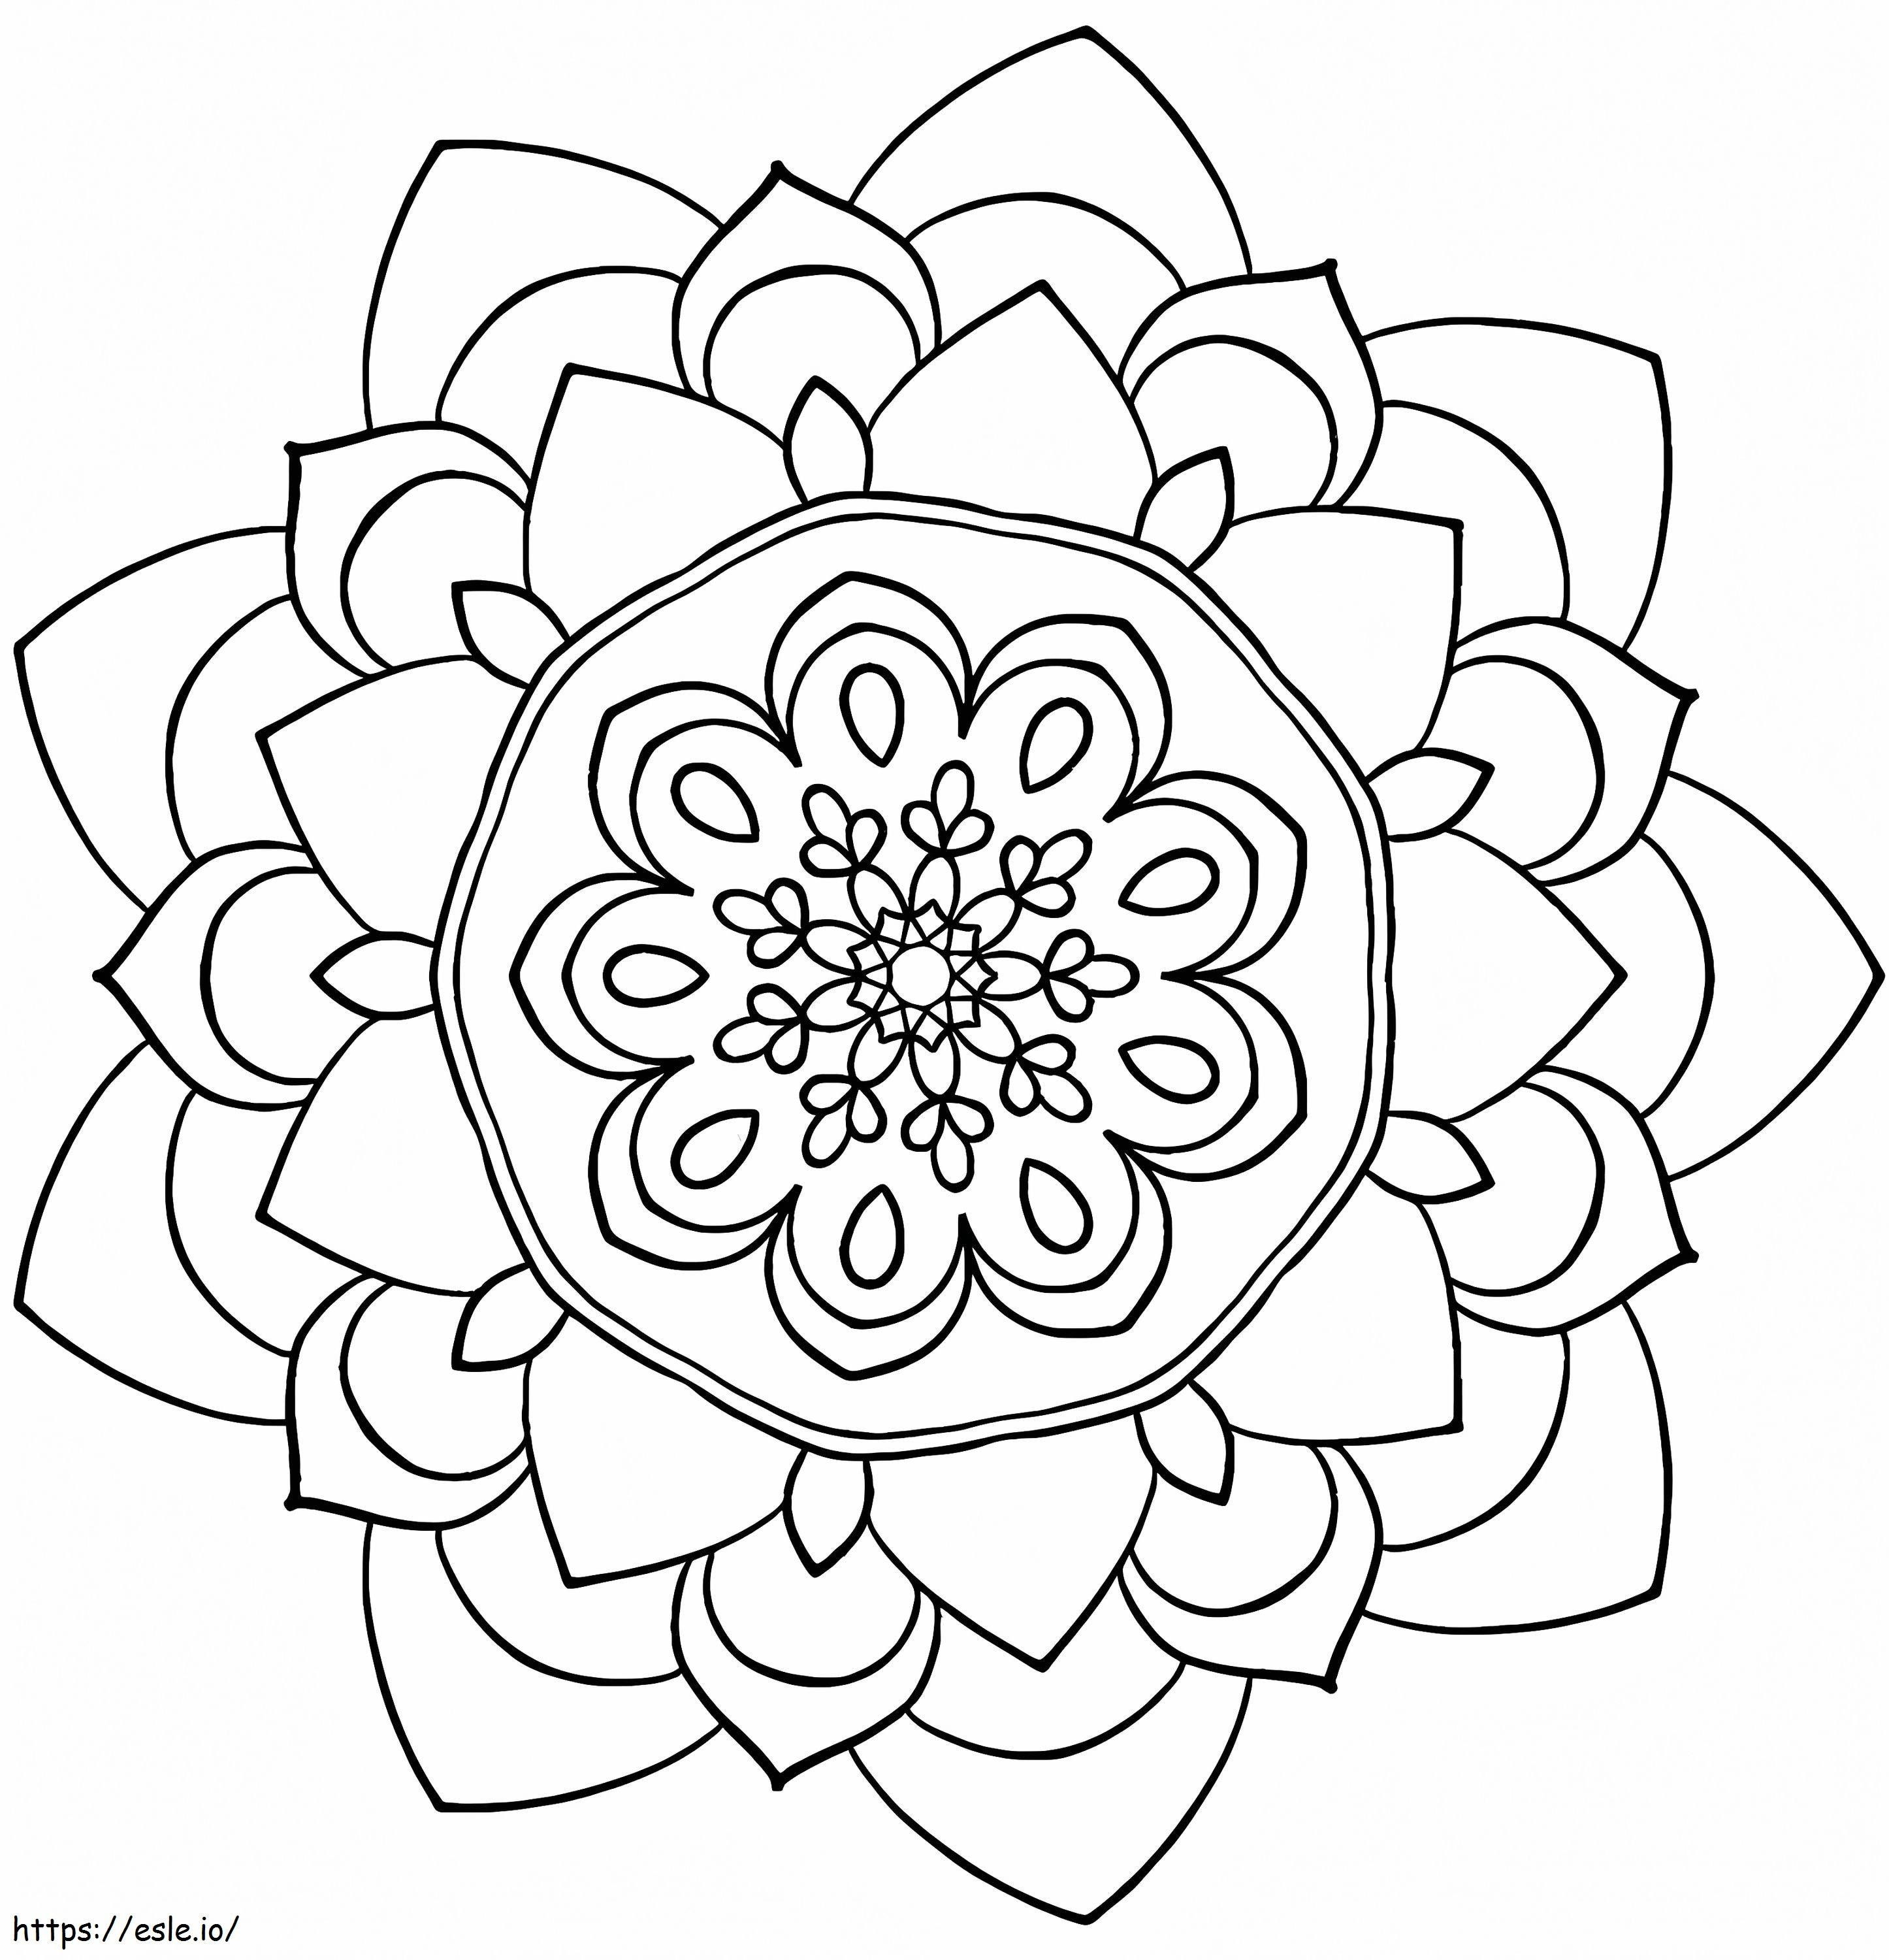 Blumen-Mandala 17 ausmalbilder